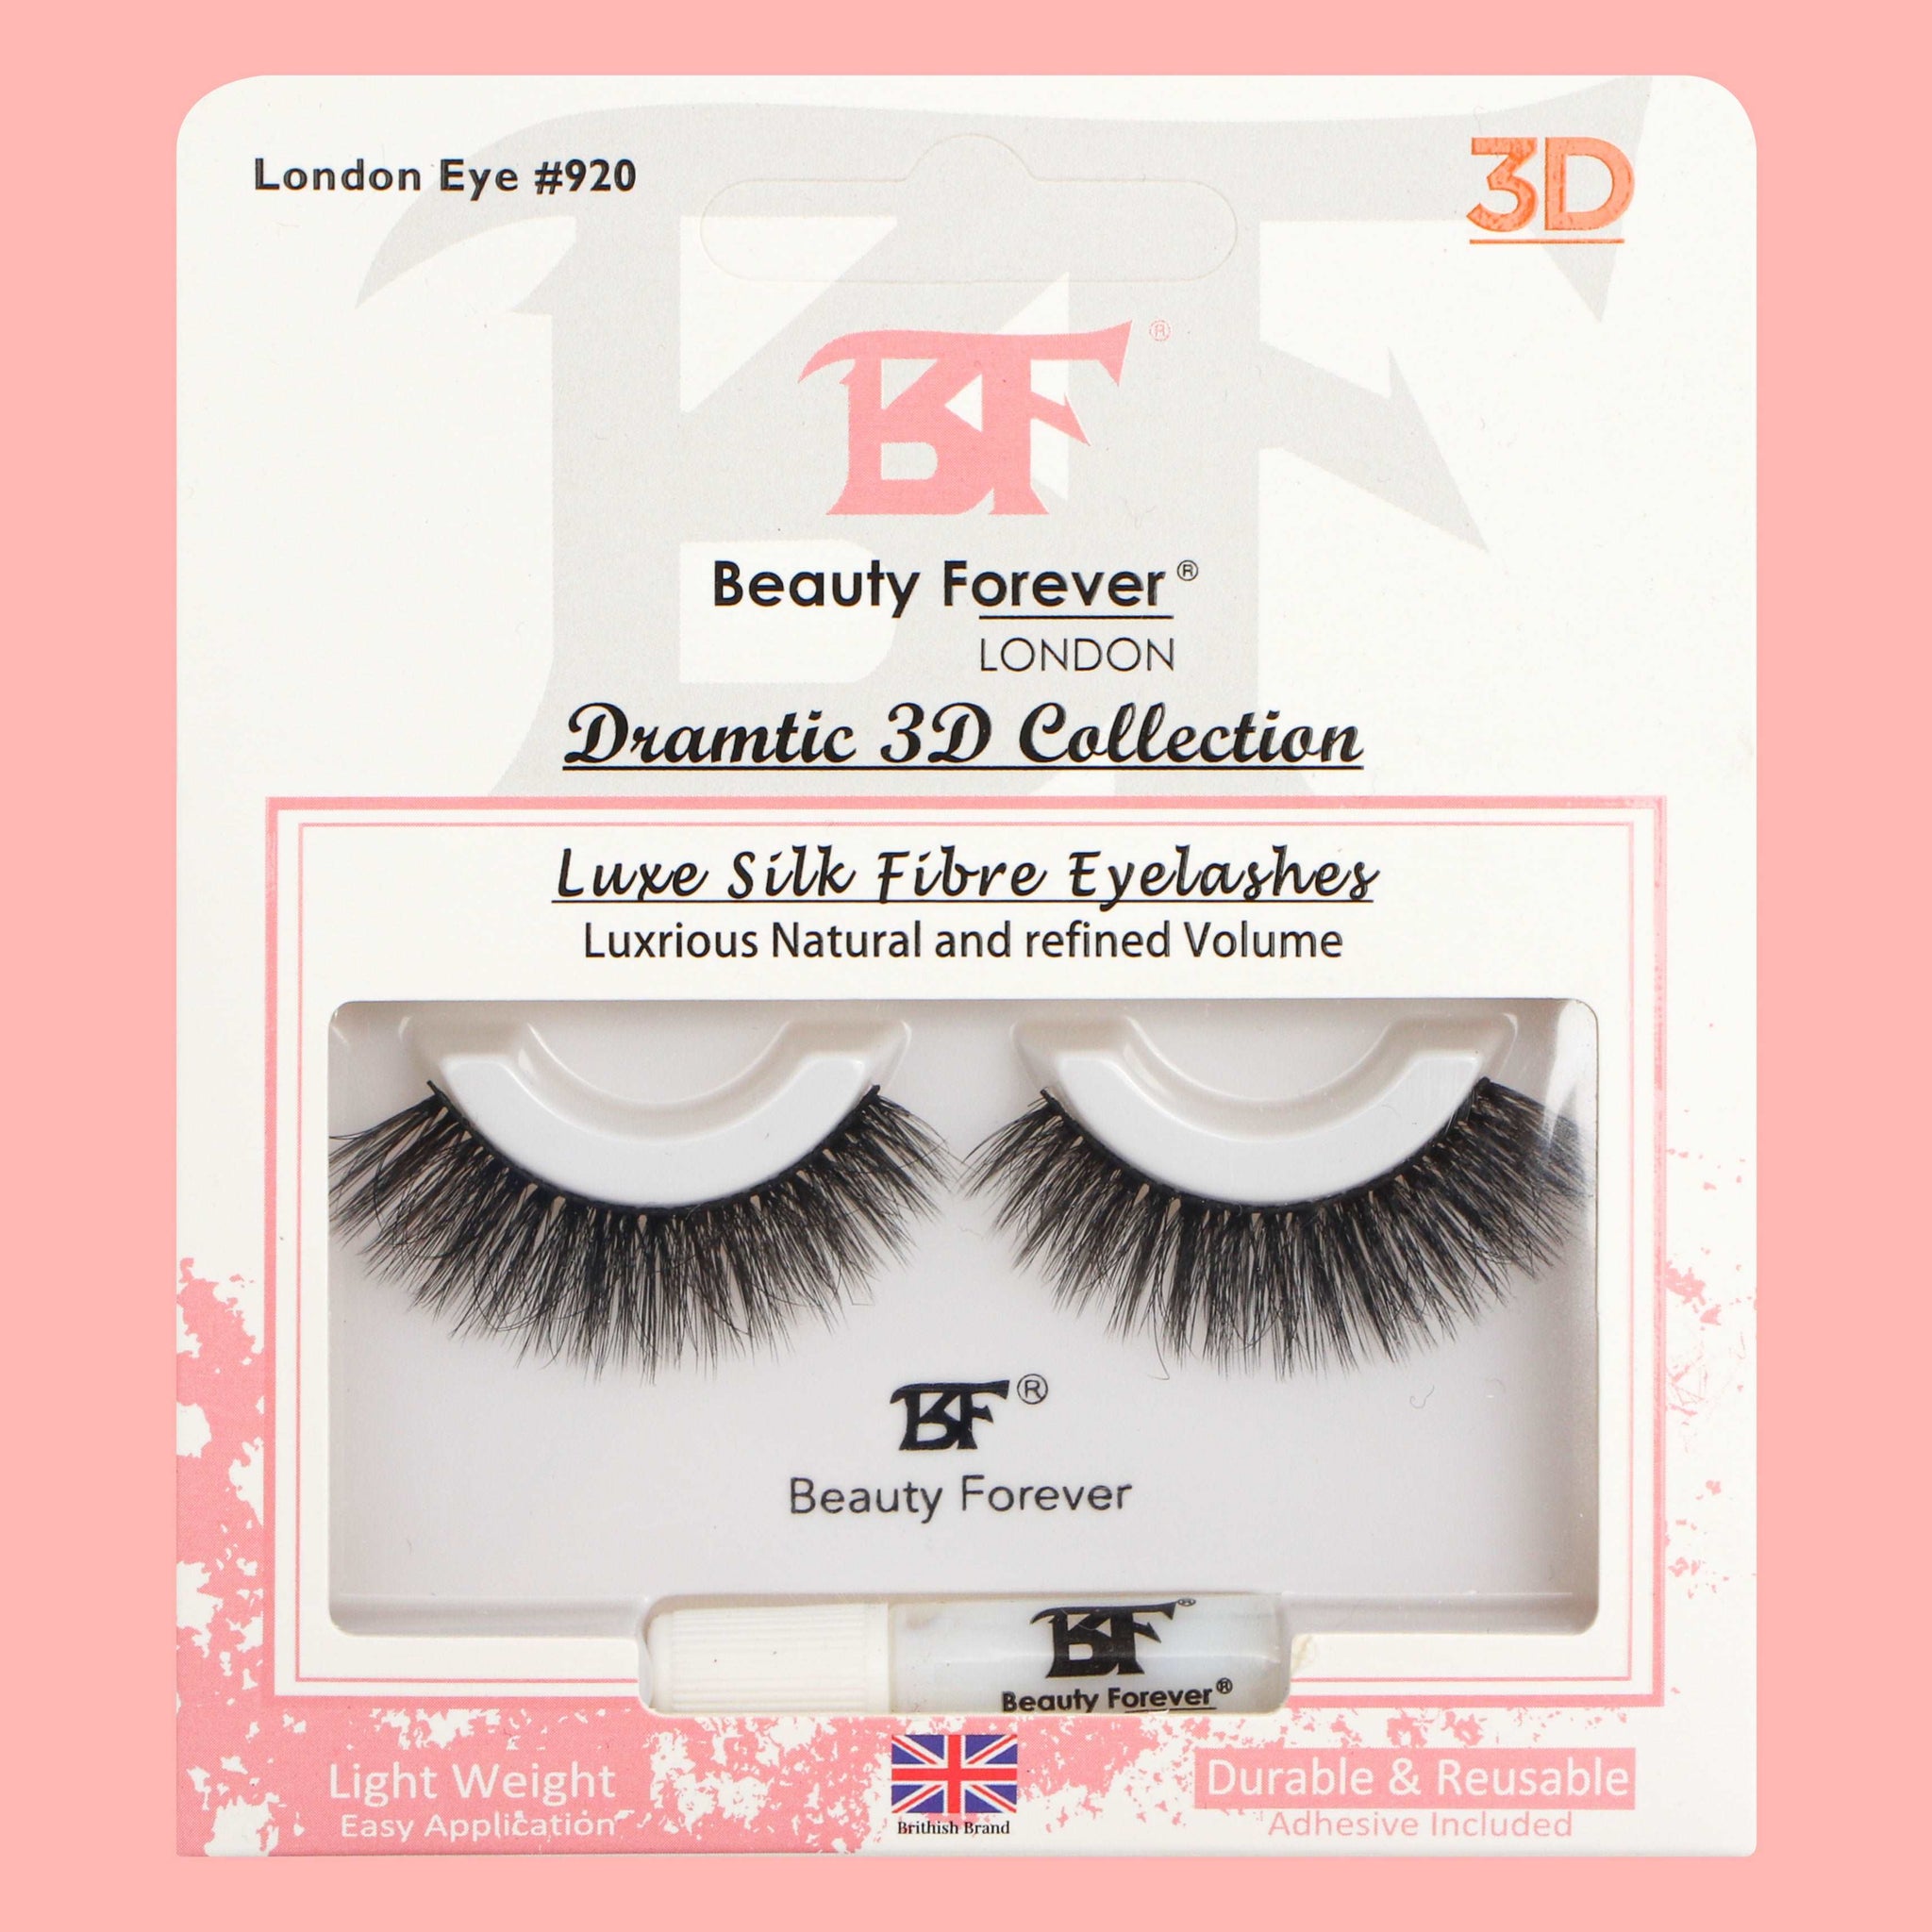 Beauty Forever Luxe Silk Fibre 3D Eyelashes in London Eye #920